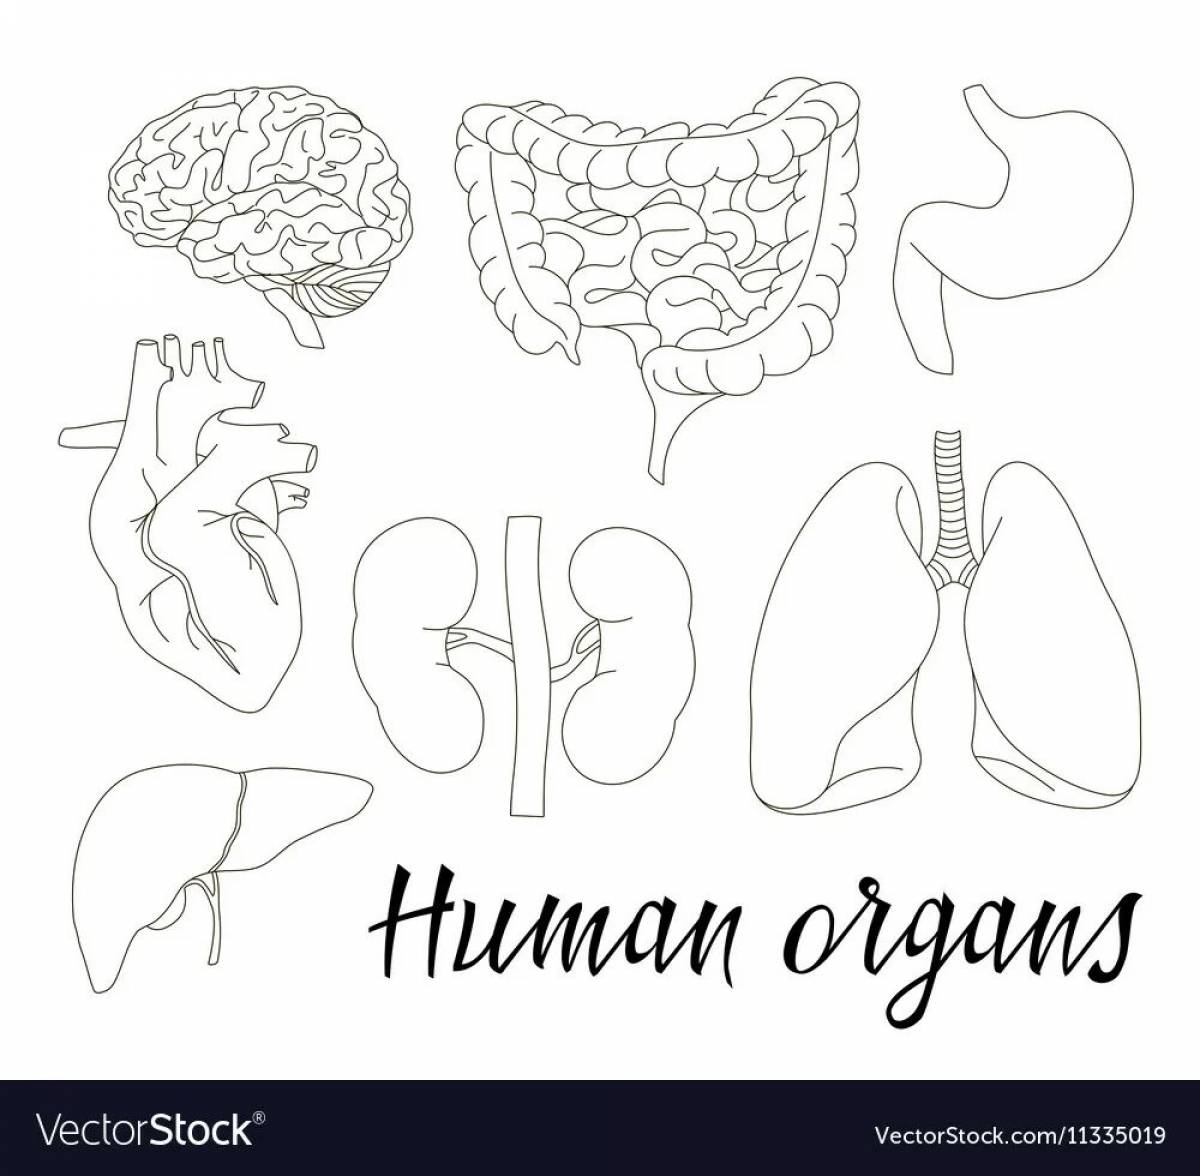 Internal organs #6